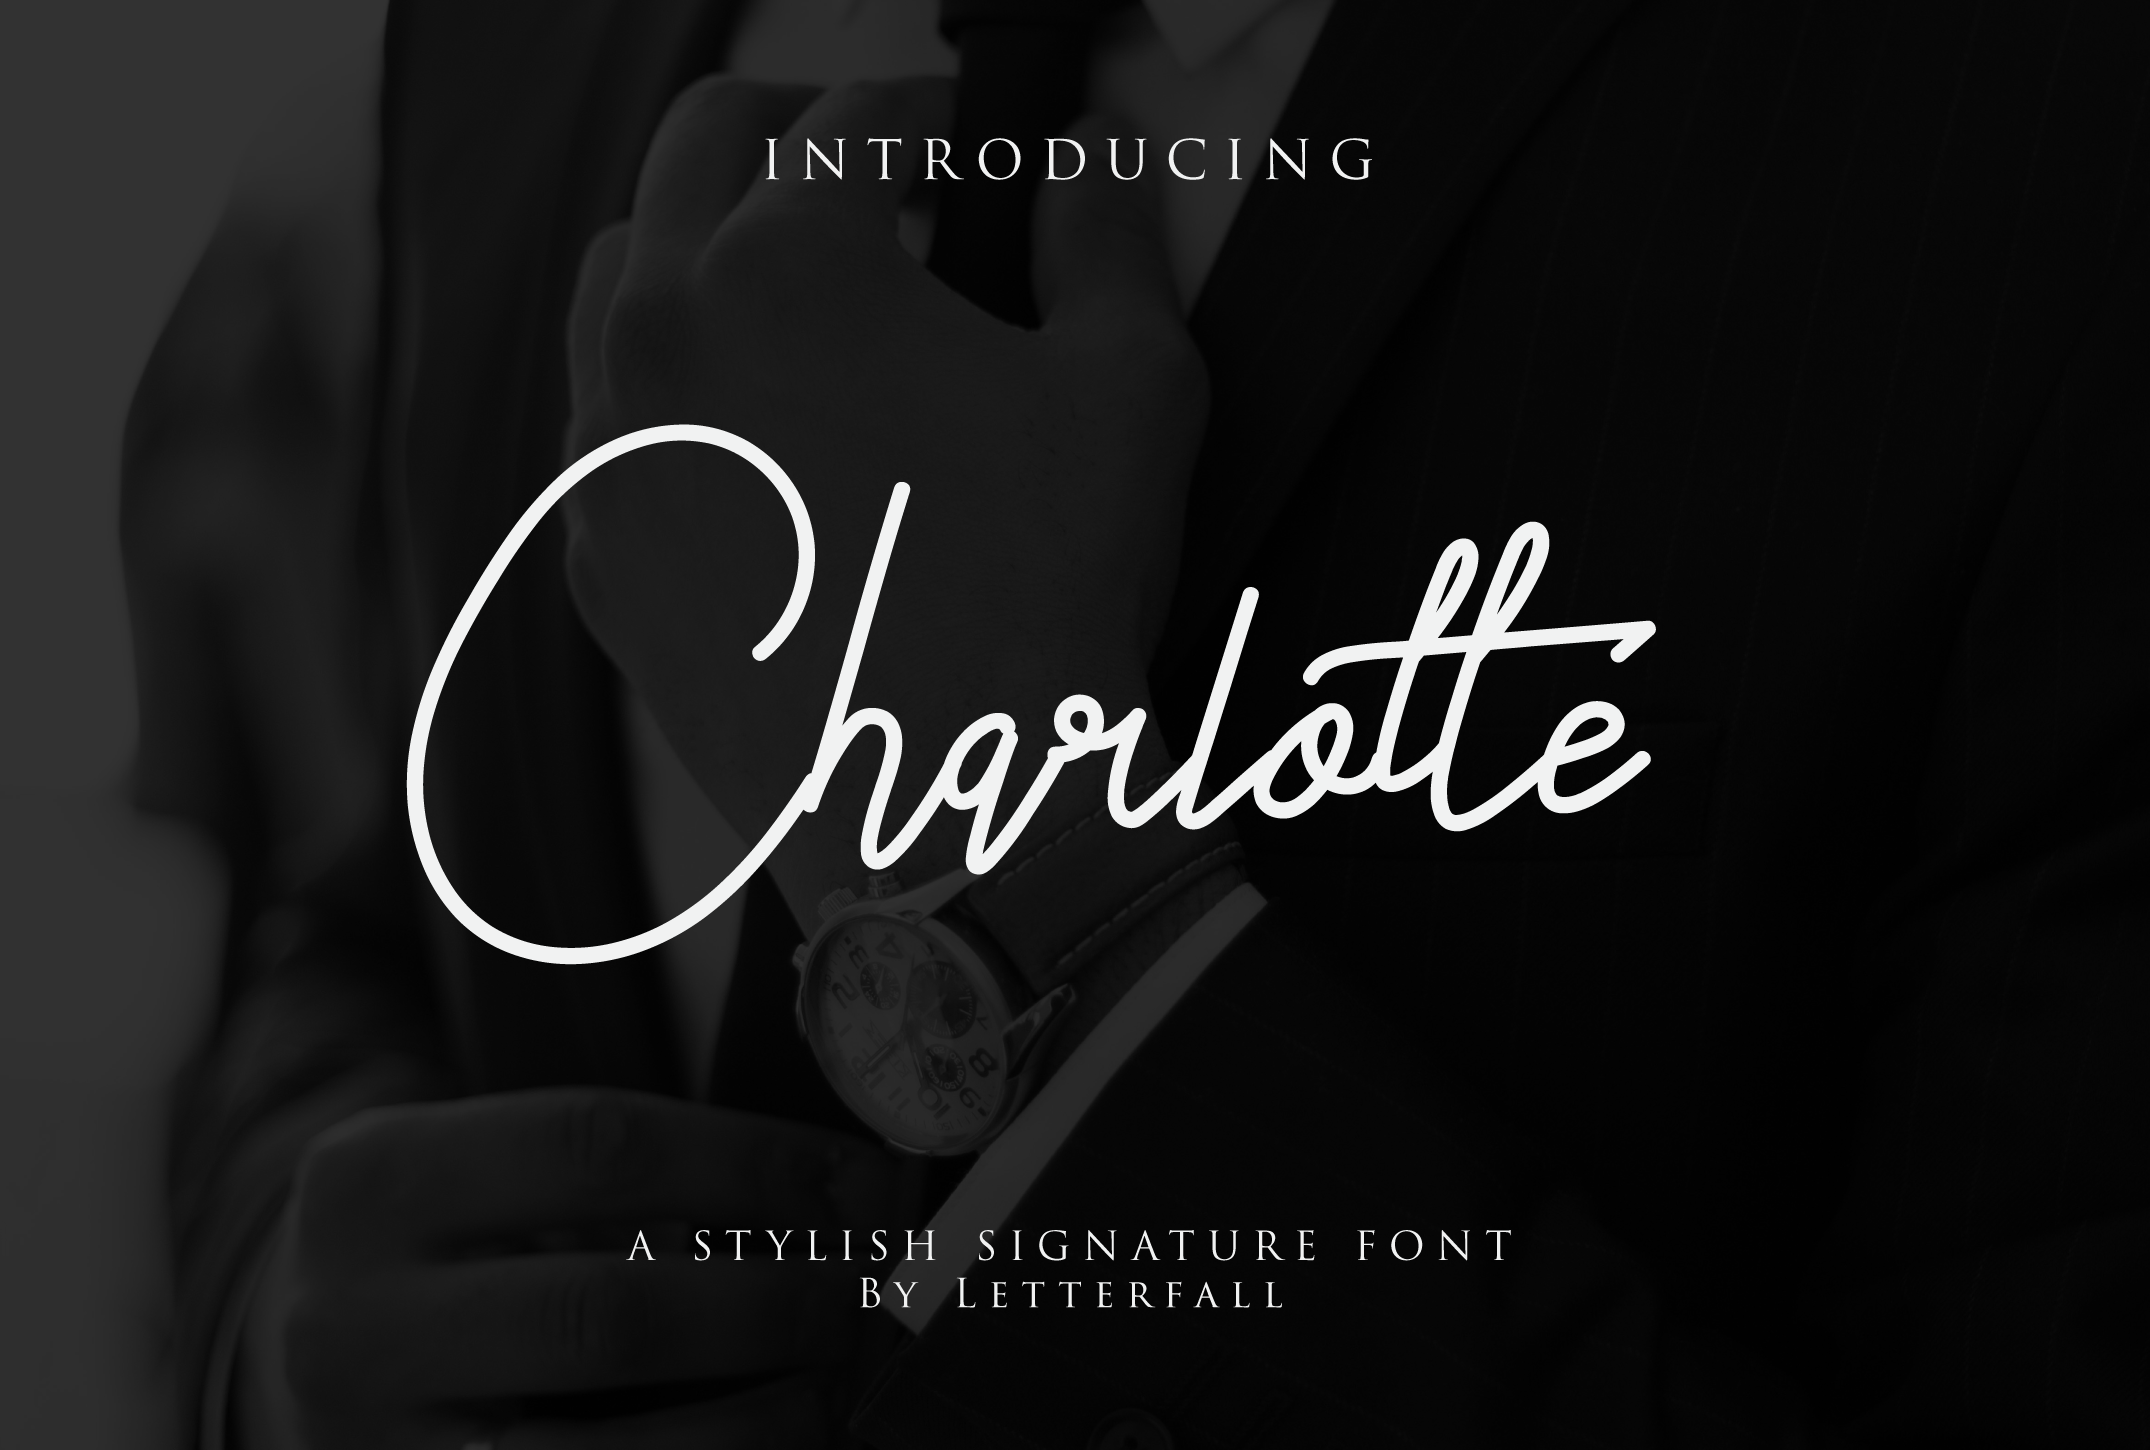 Charlotte手写时尚签名连笔飘逸免费英文字体下载插图